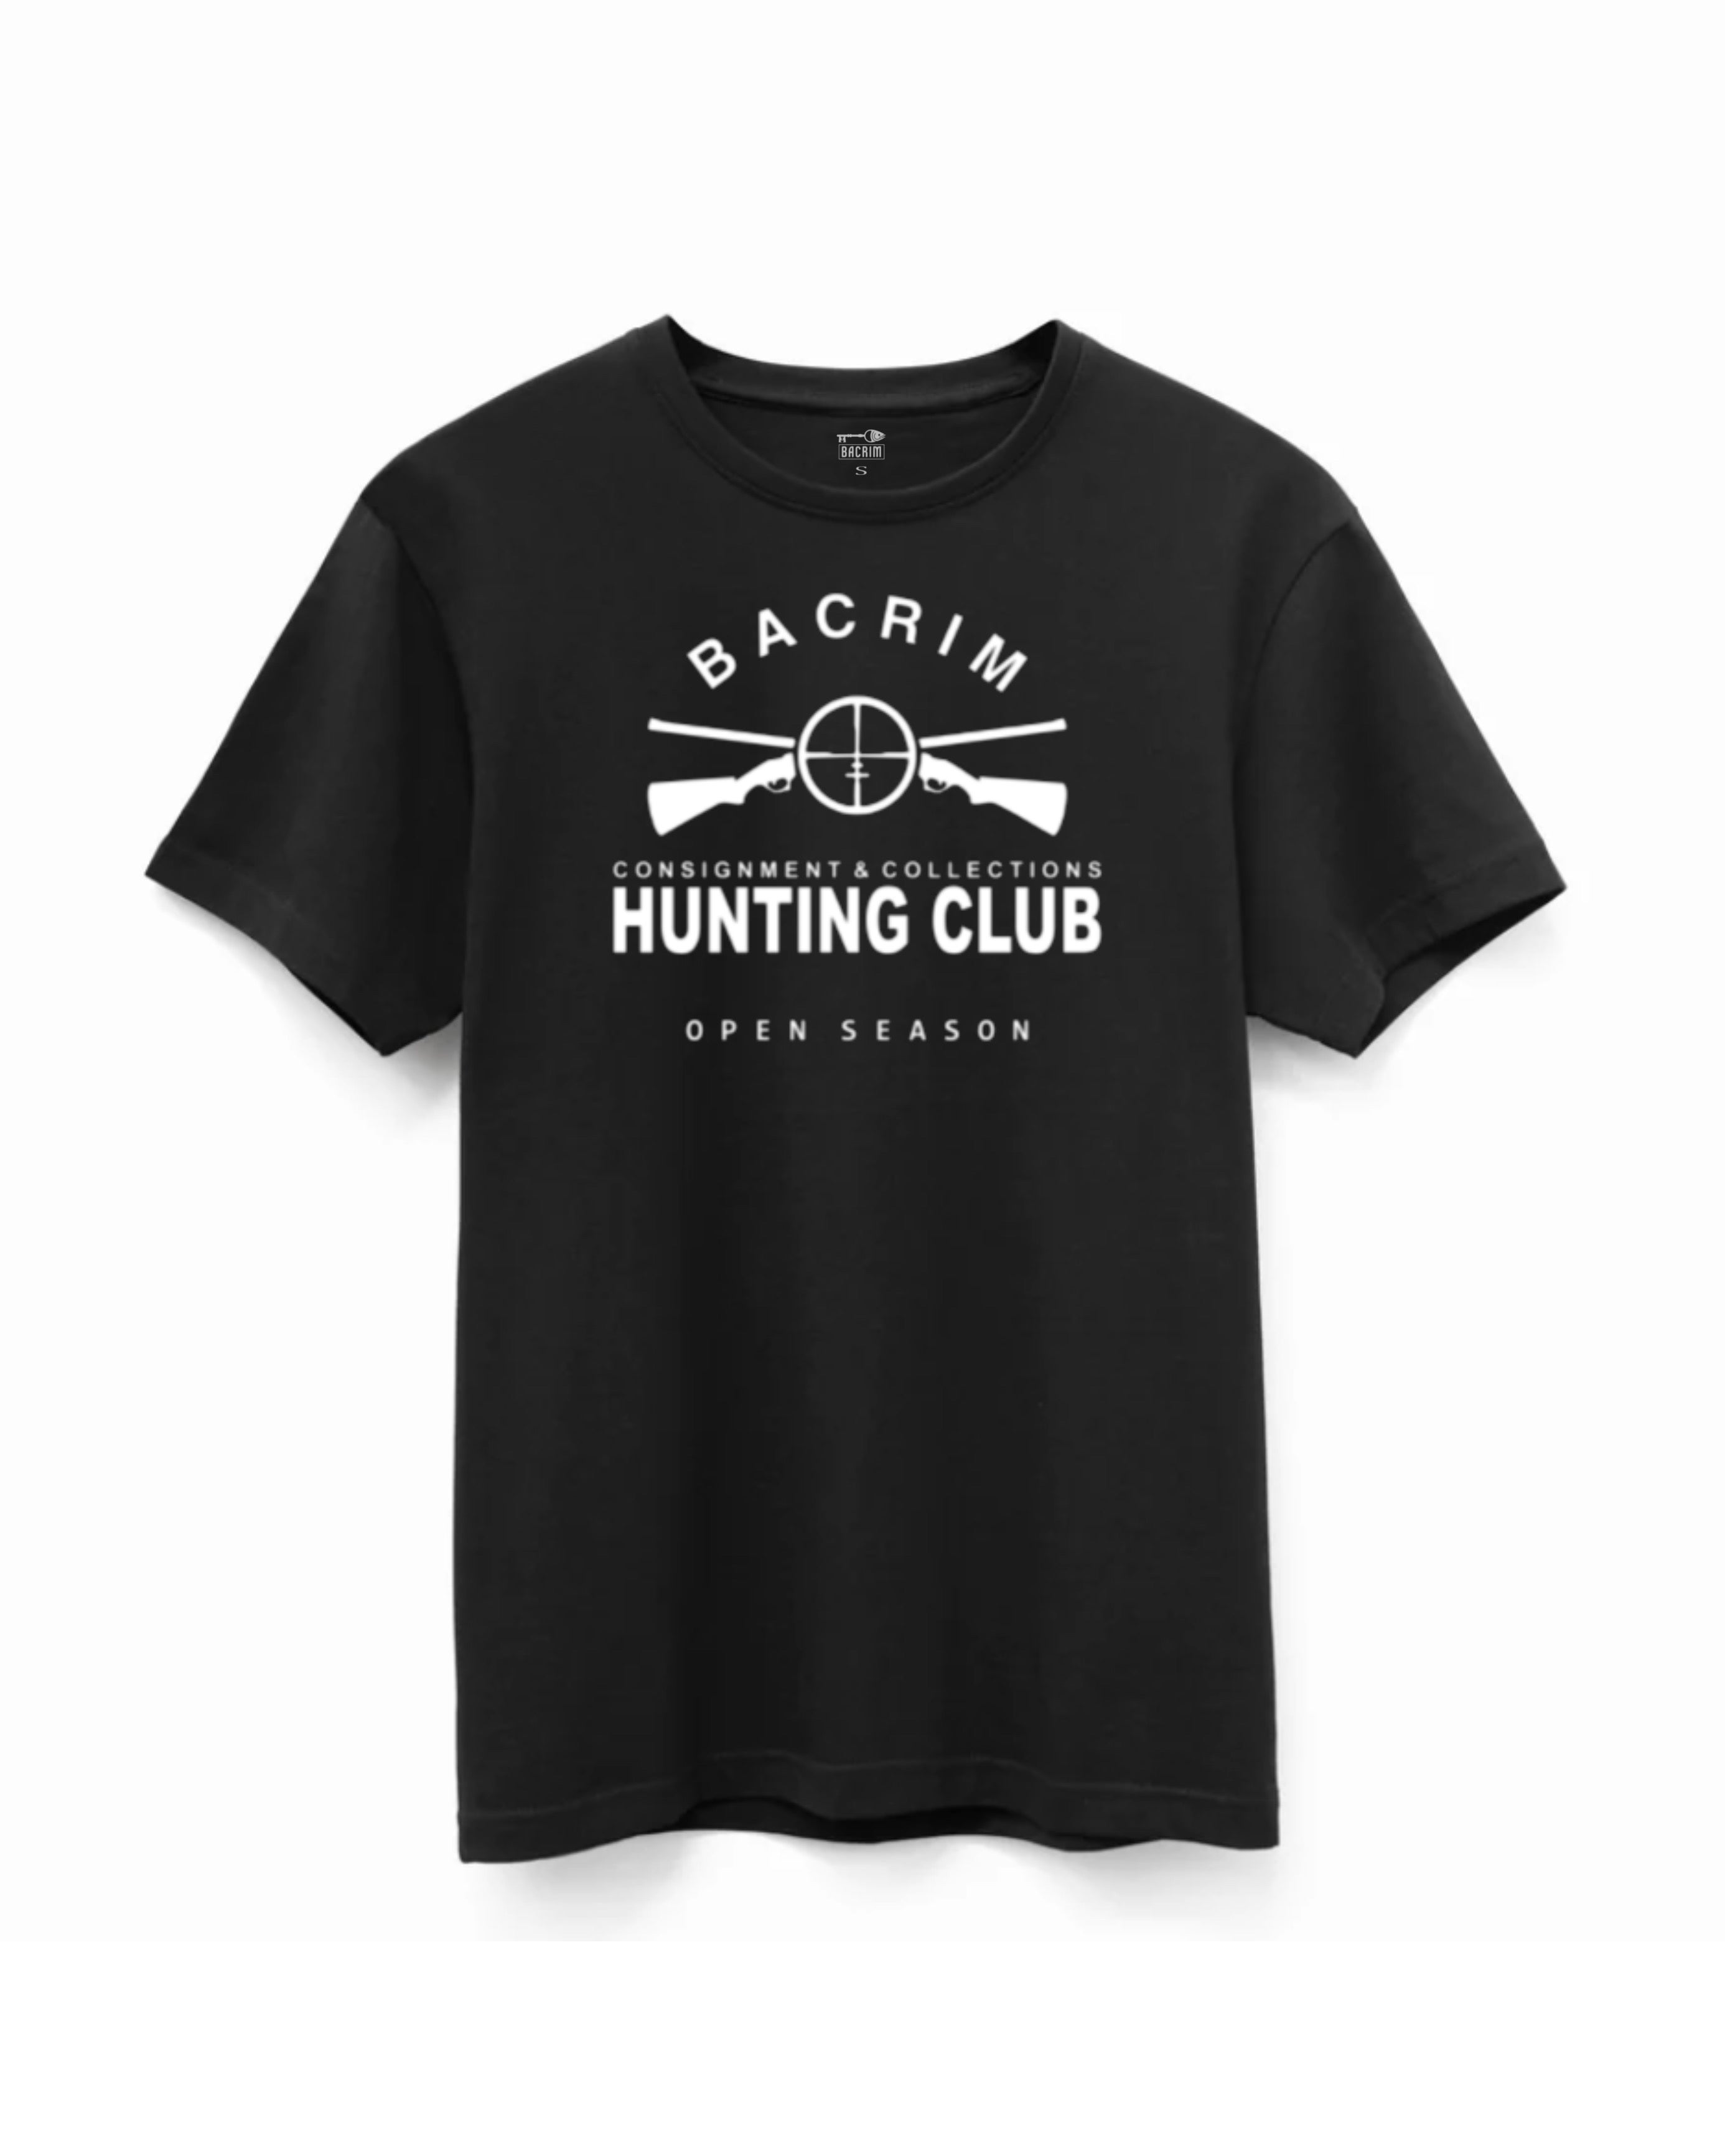 Hunting Club Tee